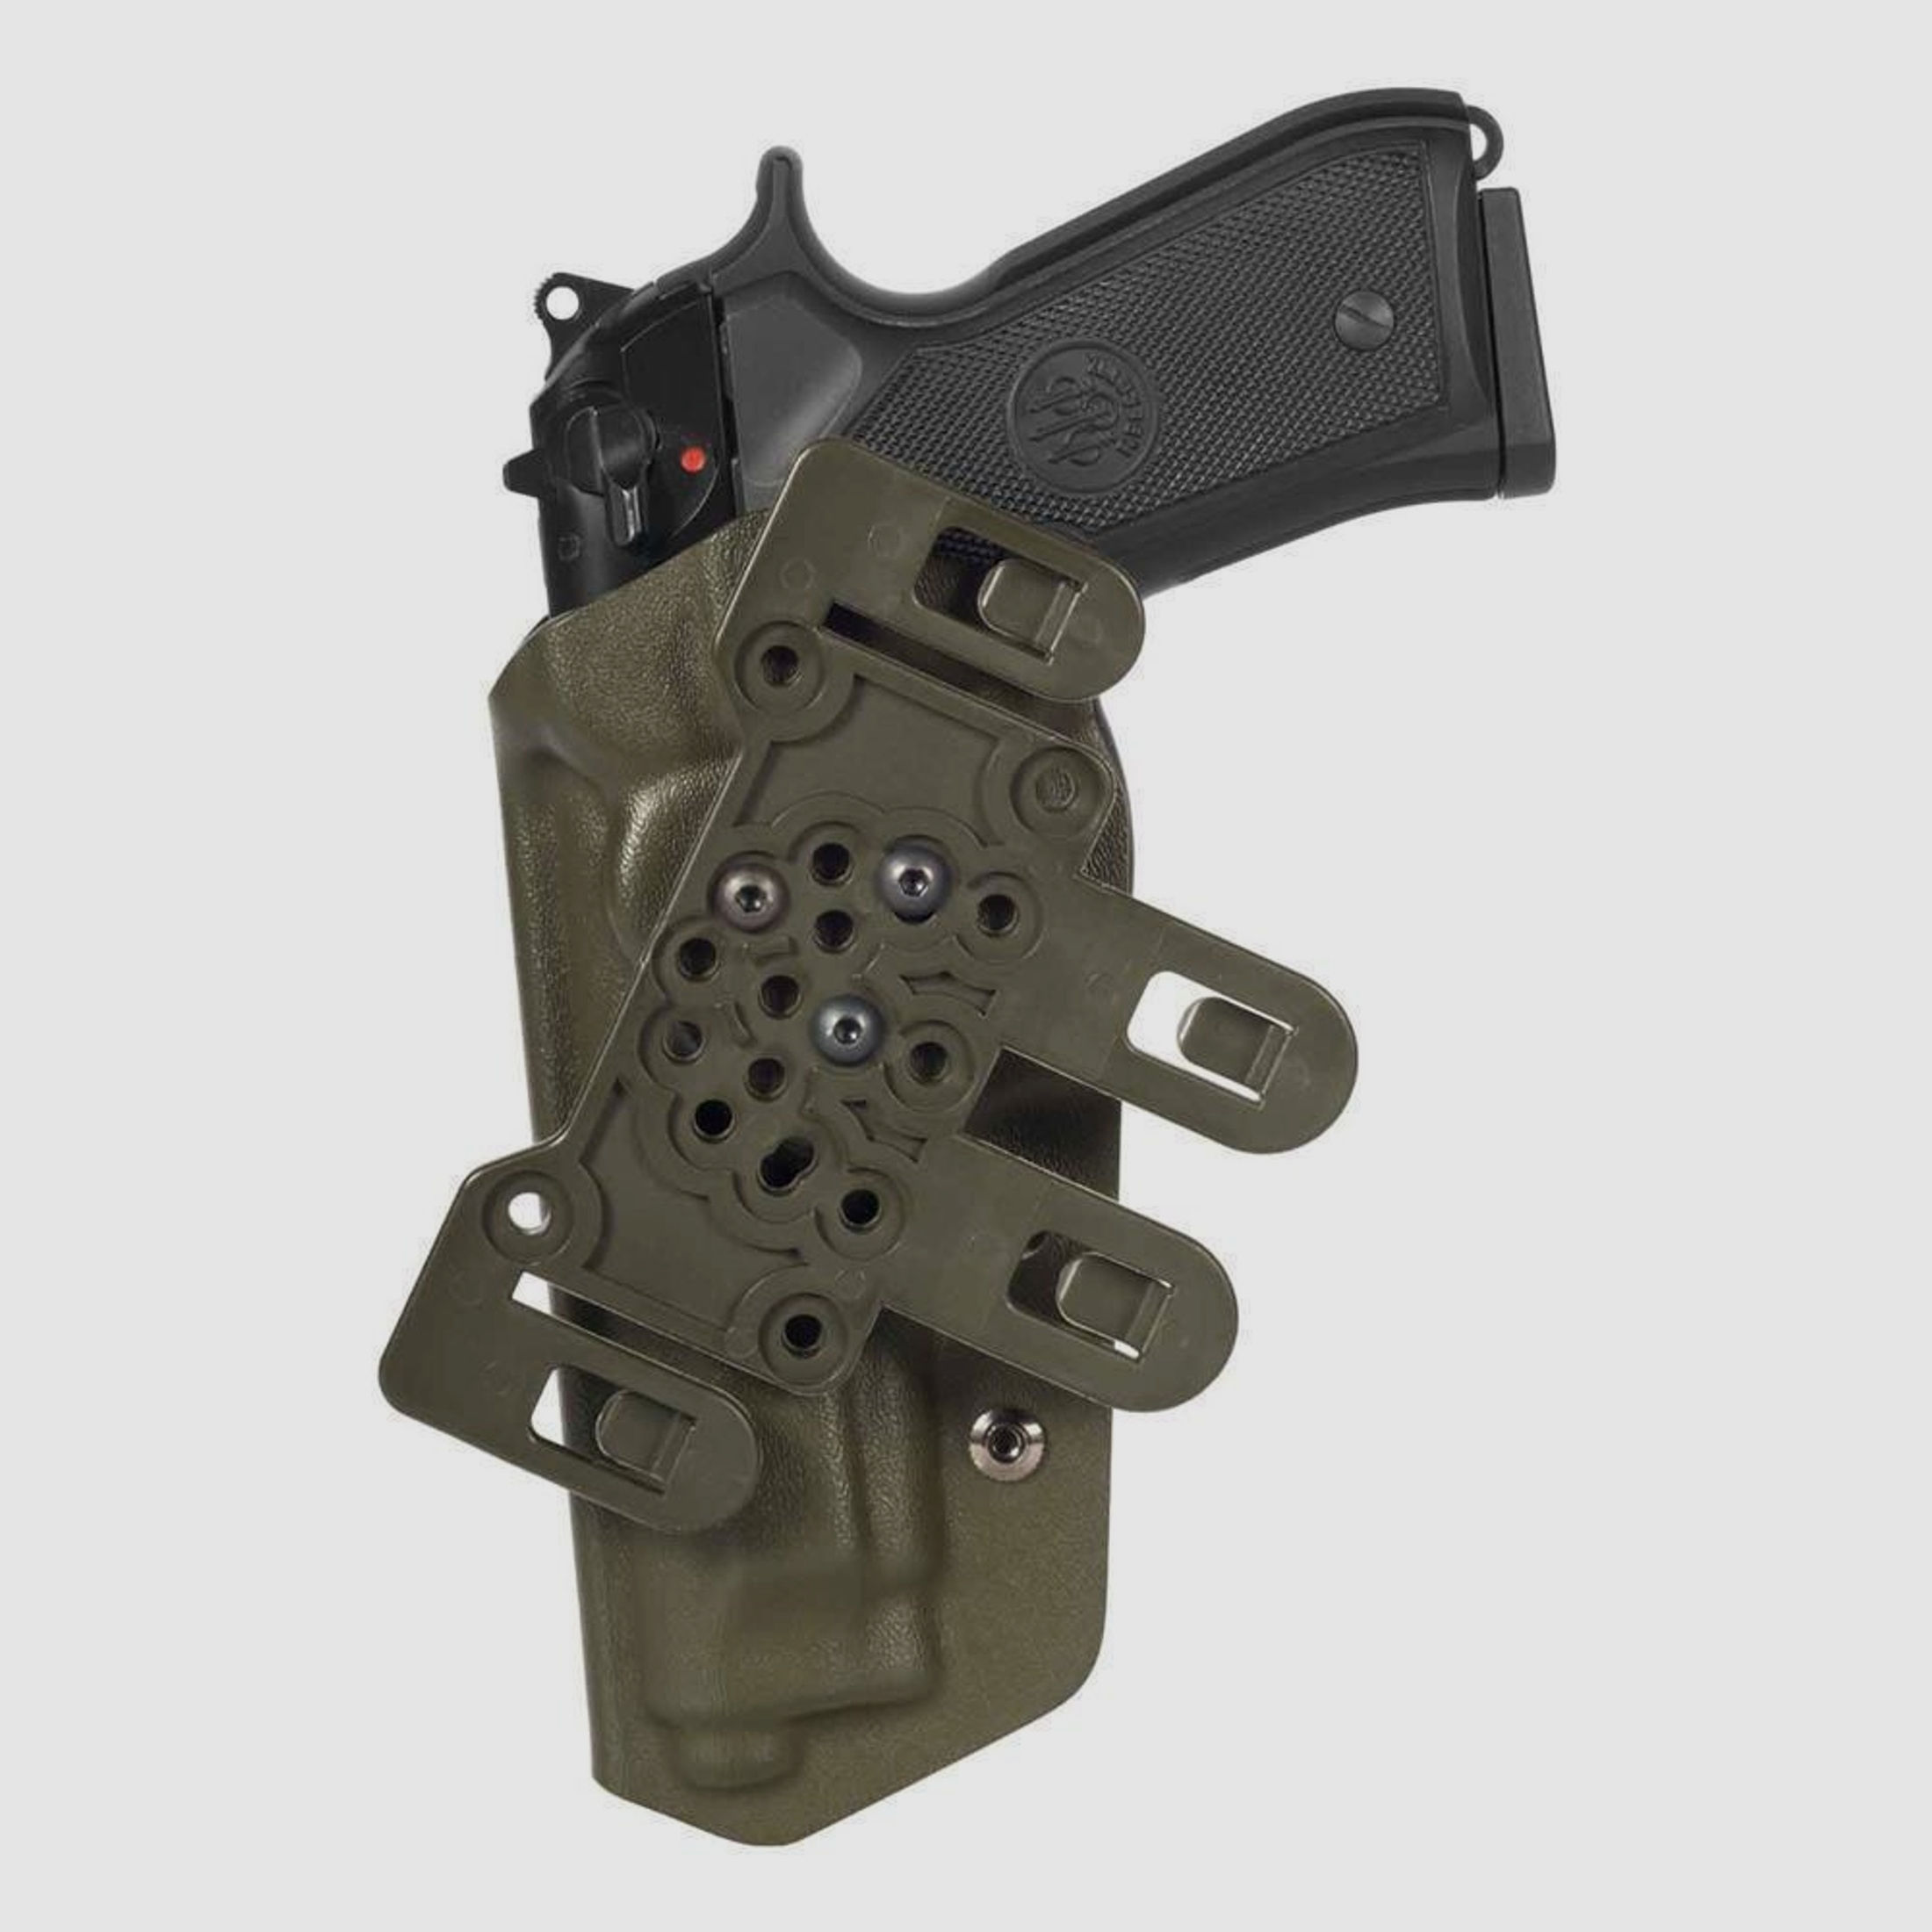 Brustholster mit MOLLE Plattform Beretta PX4 Storm / Compact / 8000-OD Green-Linkshänder